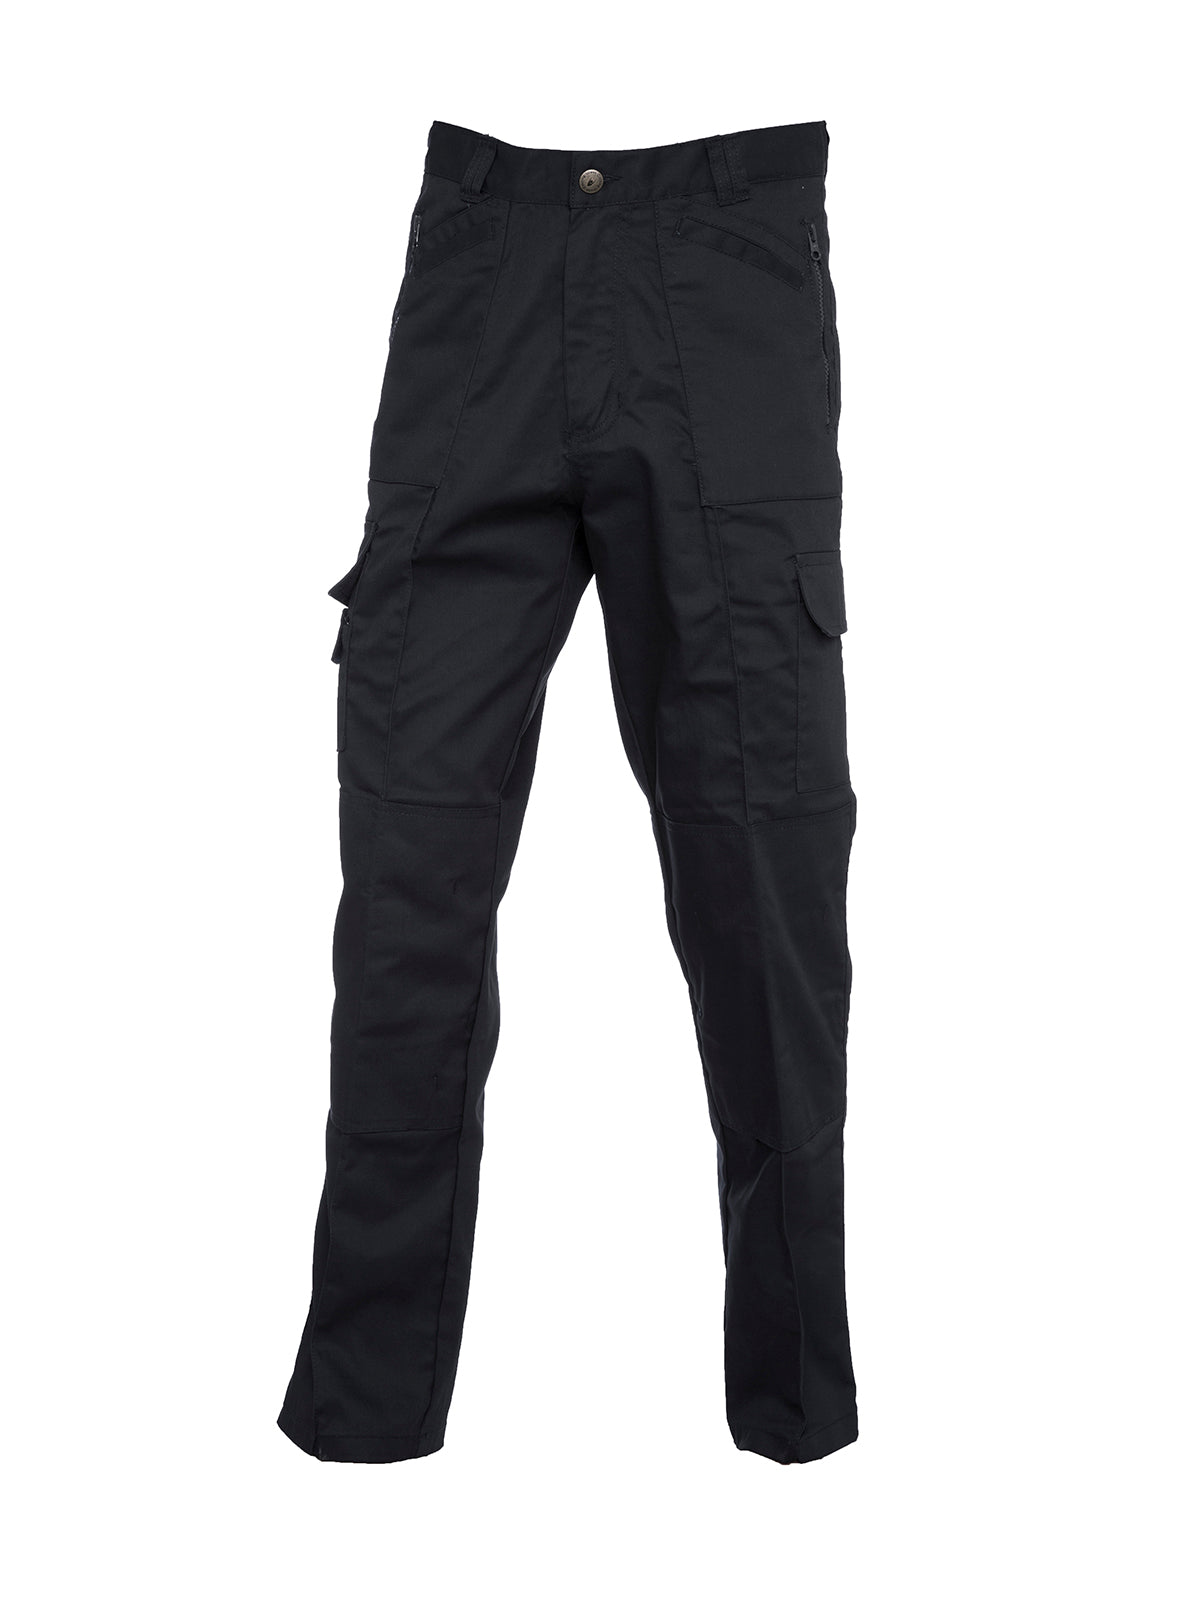 Uneek Action Trouser Regular UC903R - Black